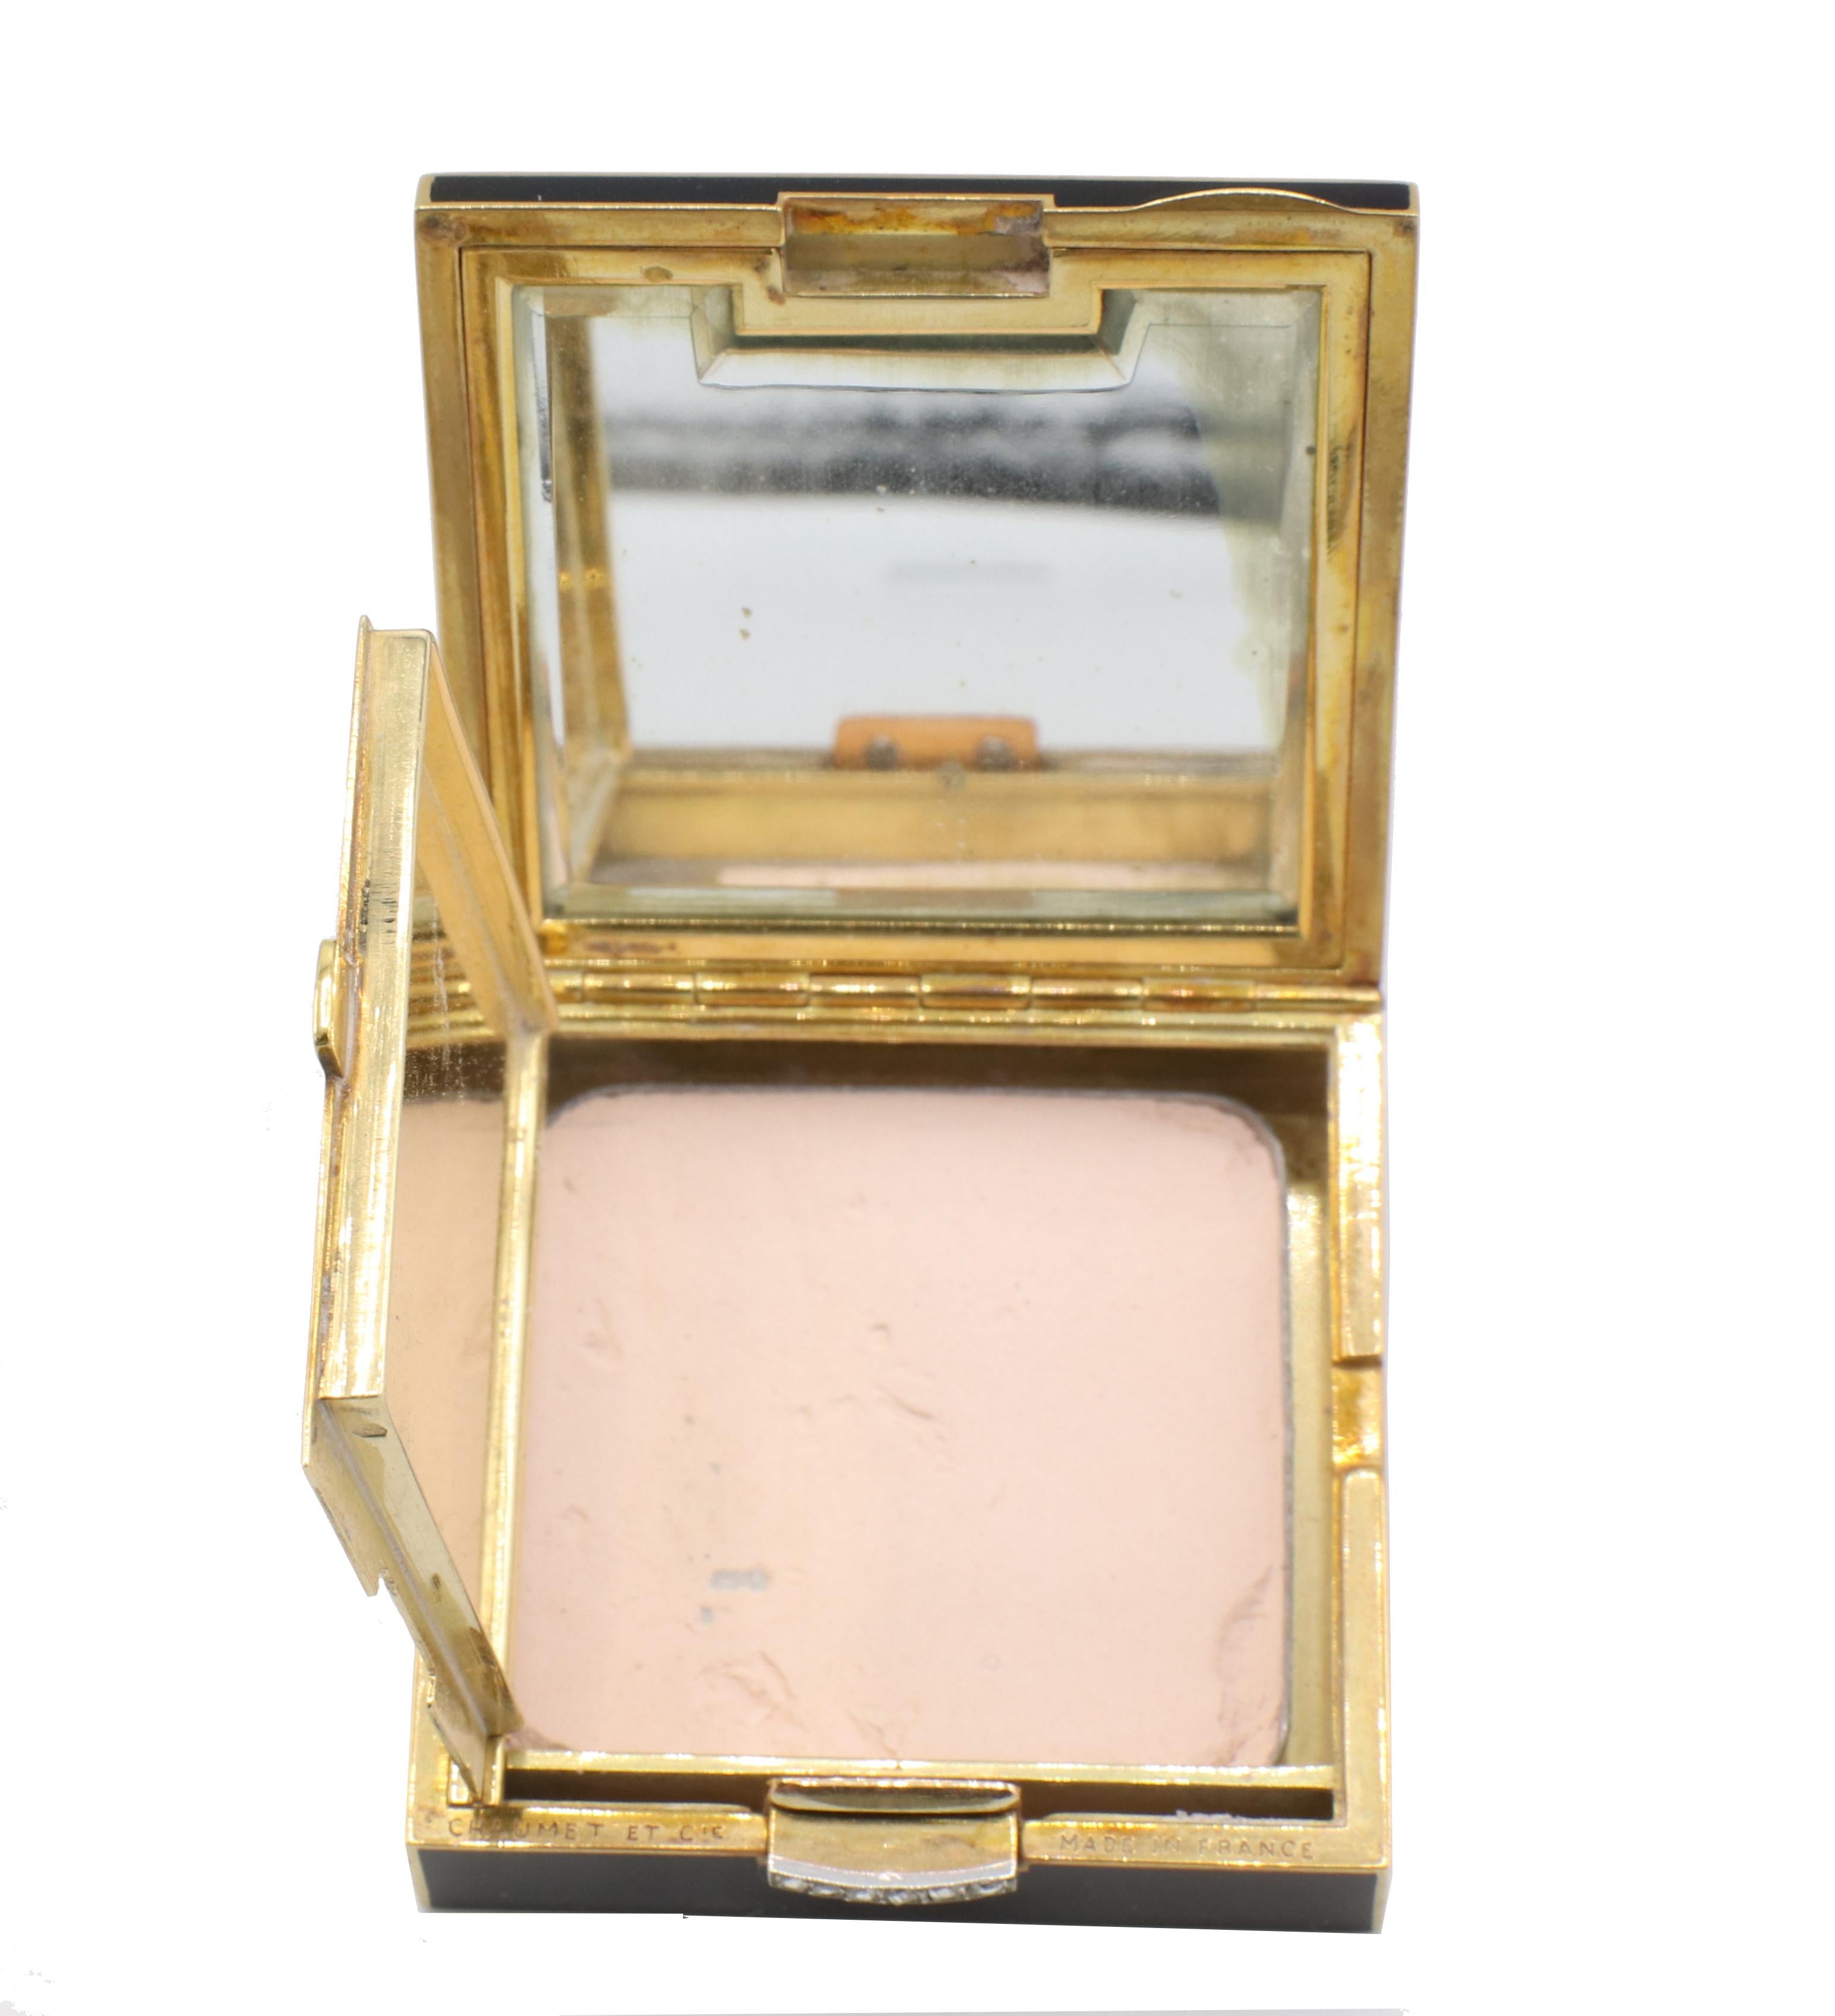 Art Deco Chaumet 18 Karat Yellow Gold & Enamel Mirrored Powder Compact with Case 1